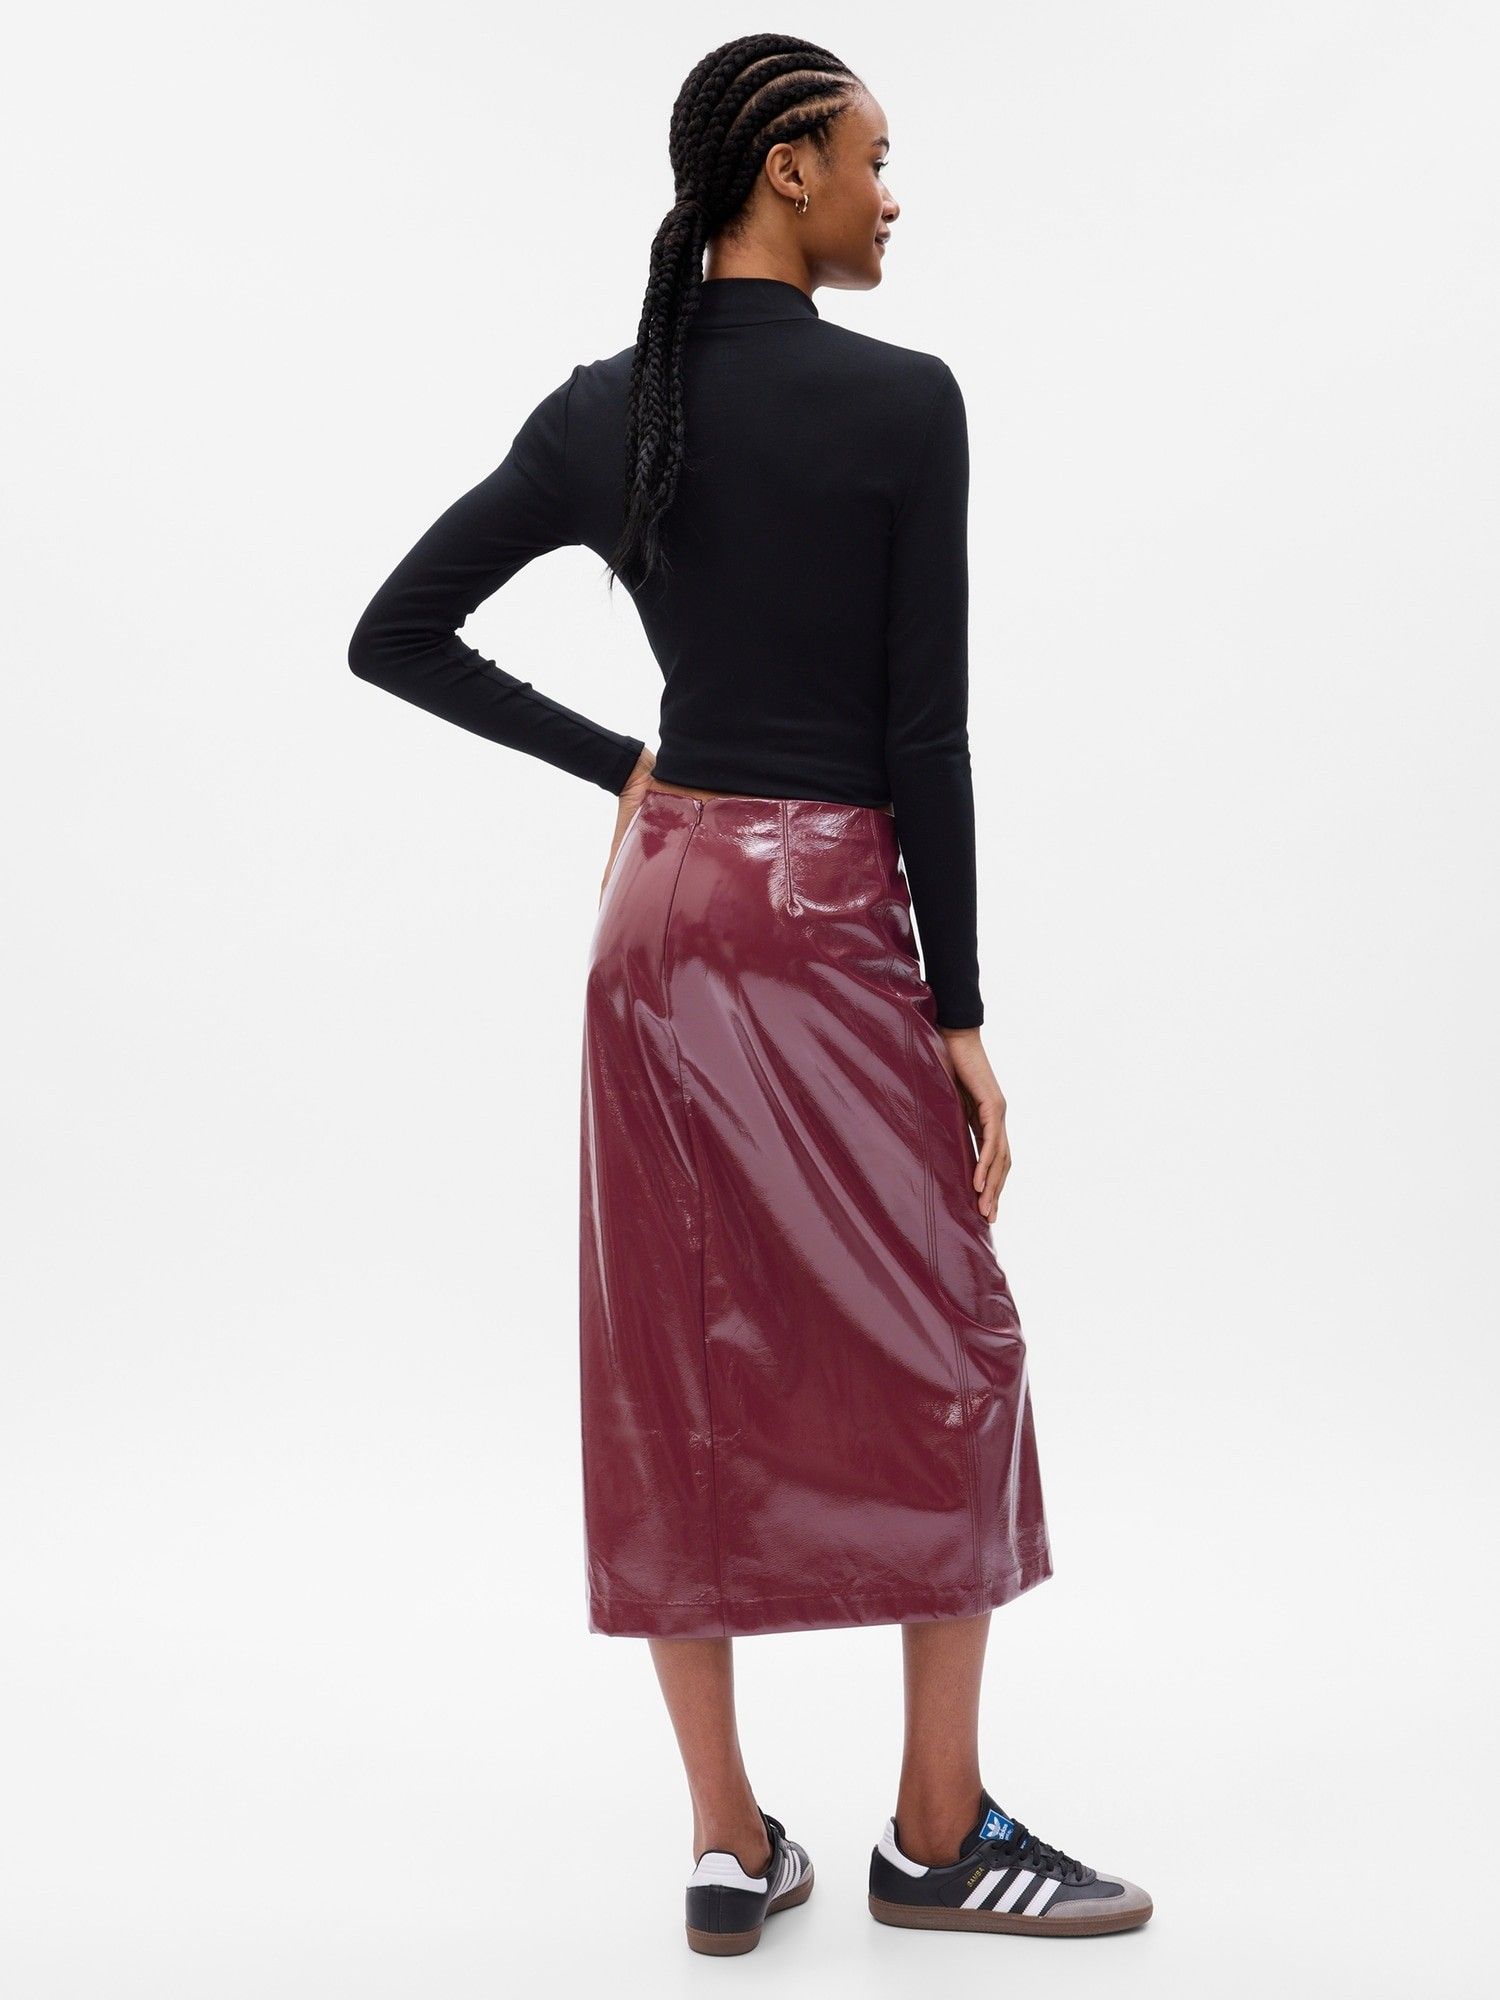 Irresistible Edge Burgundy Patent Vegan Leather Mini Skirt